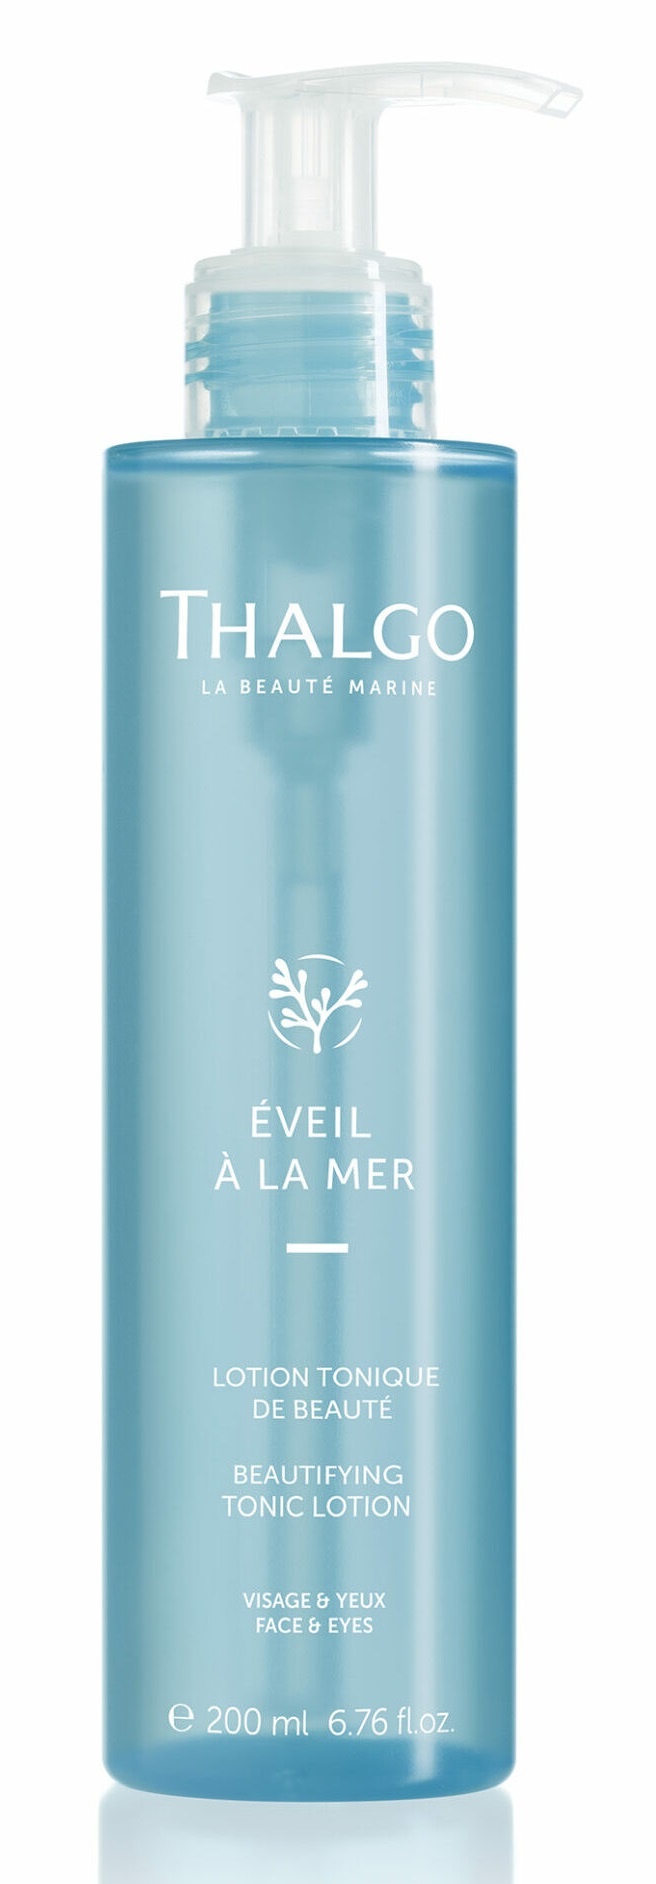 Thalgo veil  La Mer Beautifying Tonic Lotion - Face & Eyes